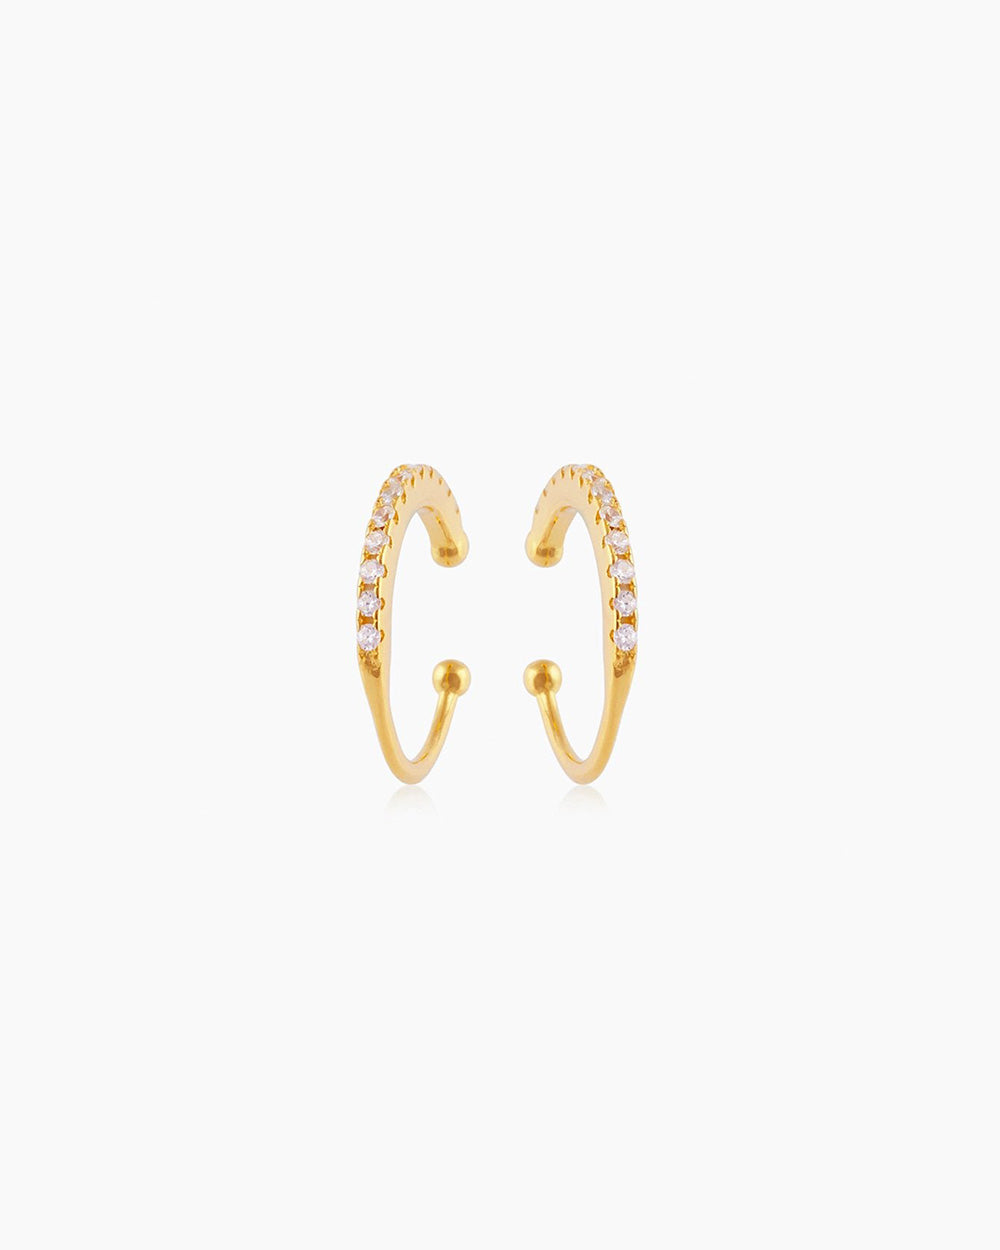 The Zoe Cuffs, pavé-set gold ear cuffs that require no piercings